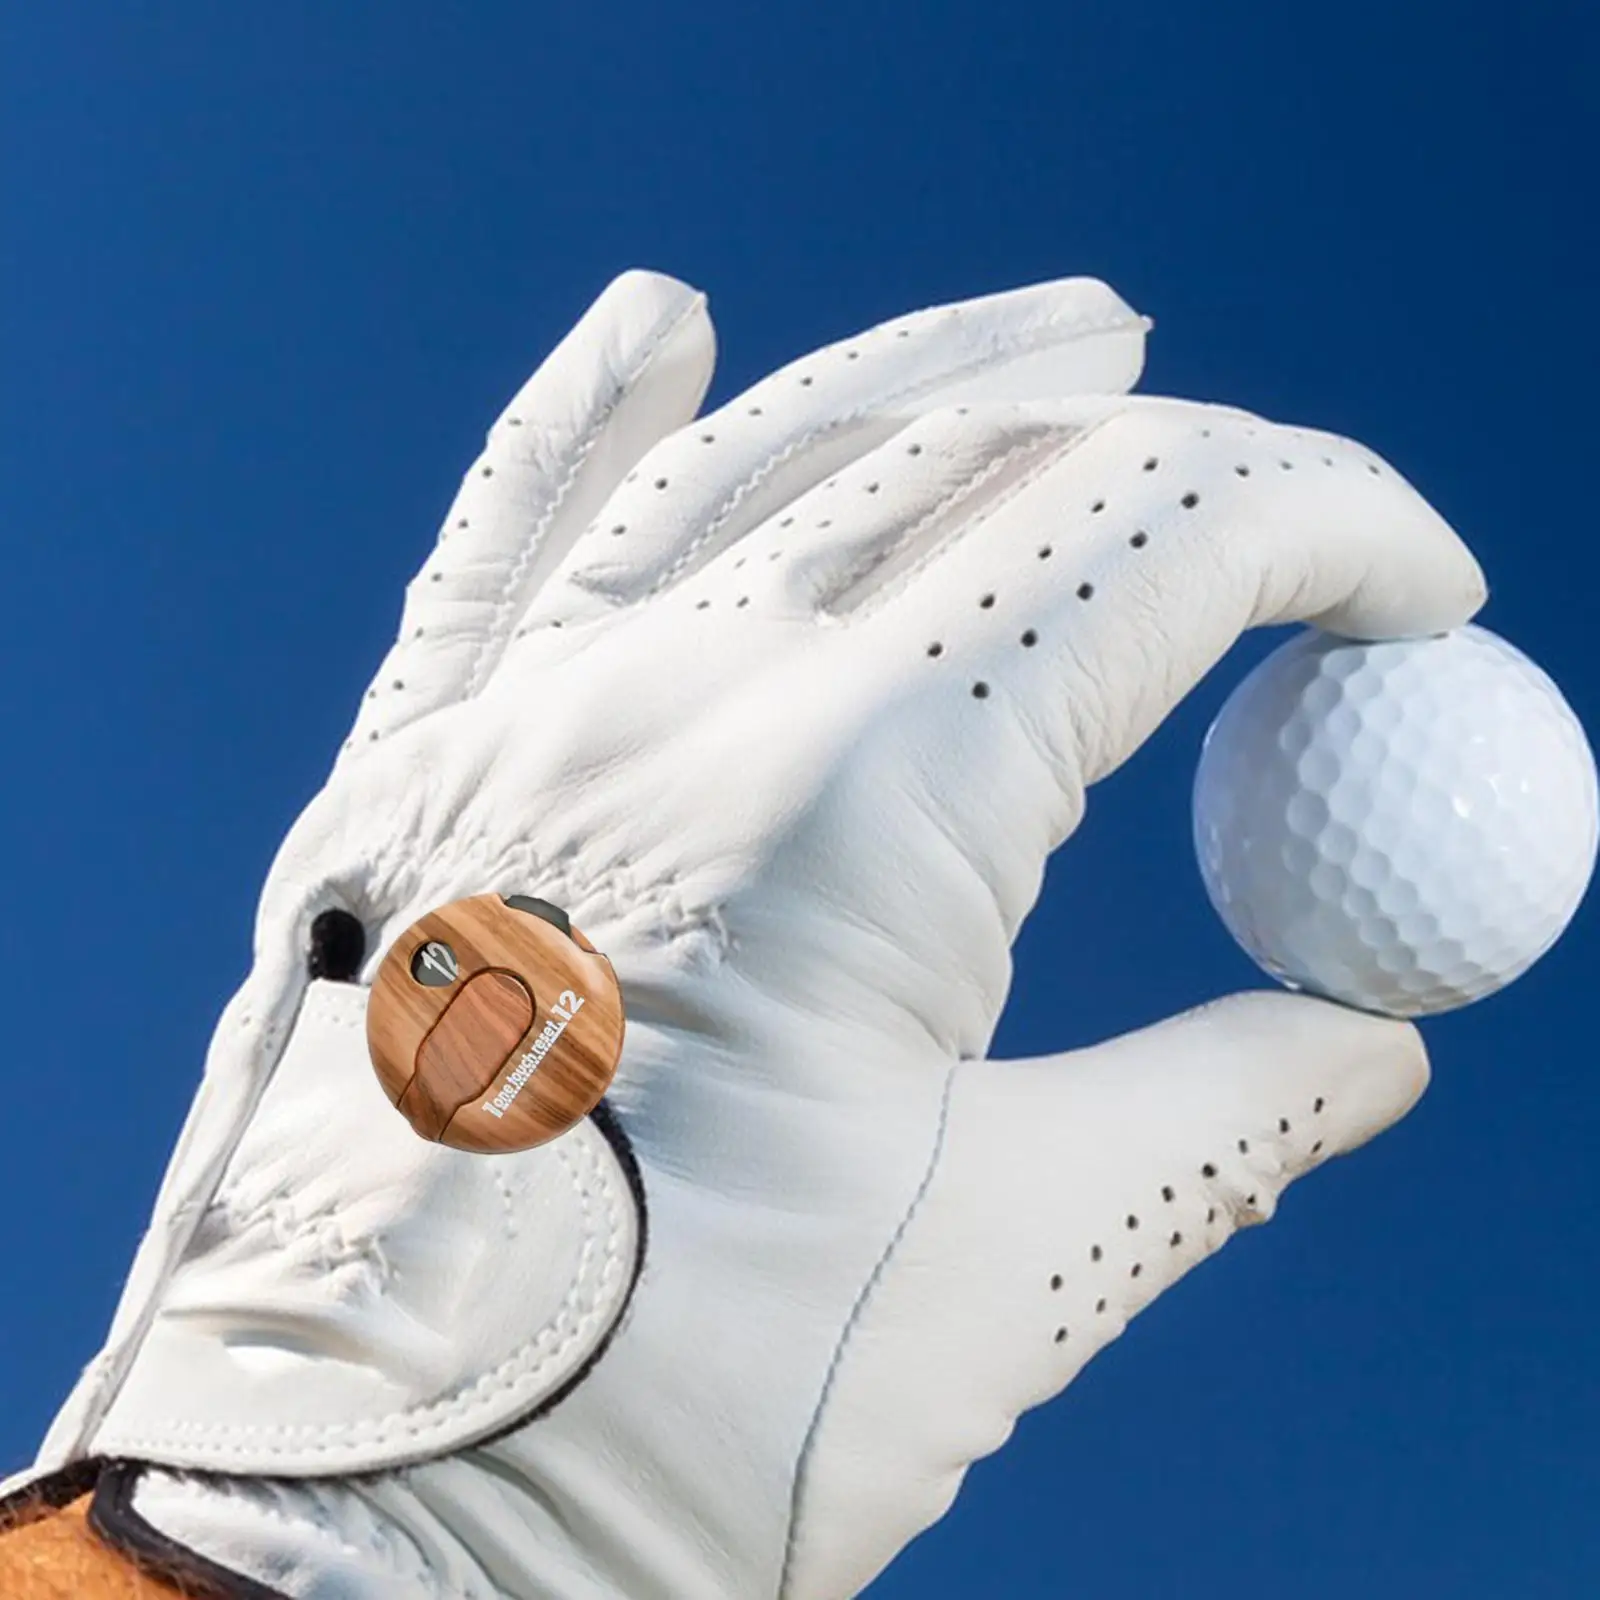 Durable Golf Score Stroke Counter Scorekeeper up to 12 Shots Score Counting Tool Golf Stroke Counter for Outdoor Sports